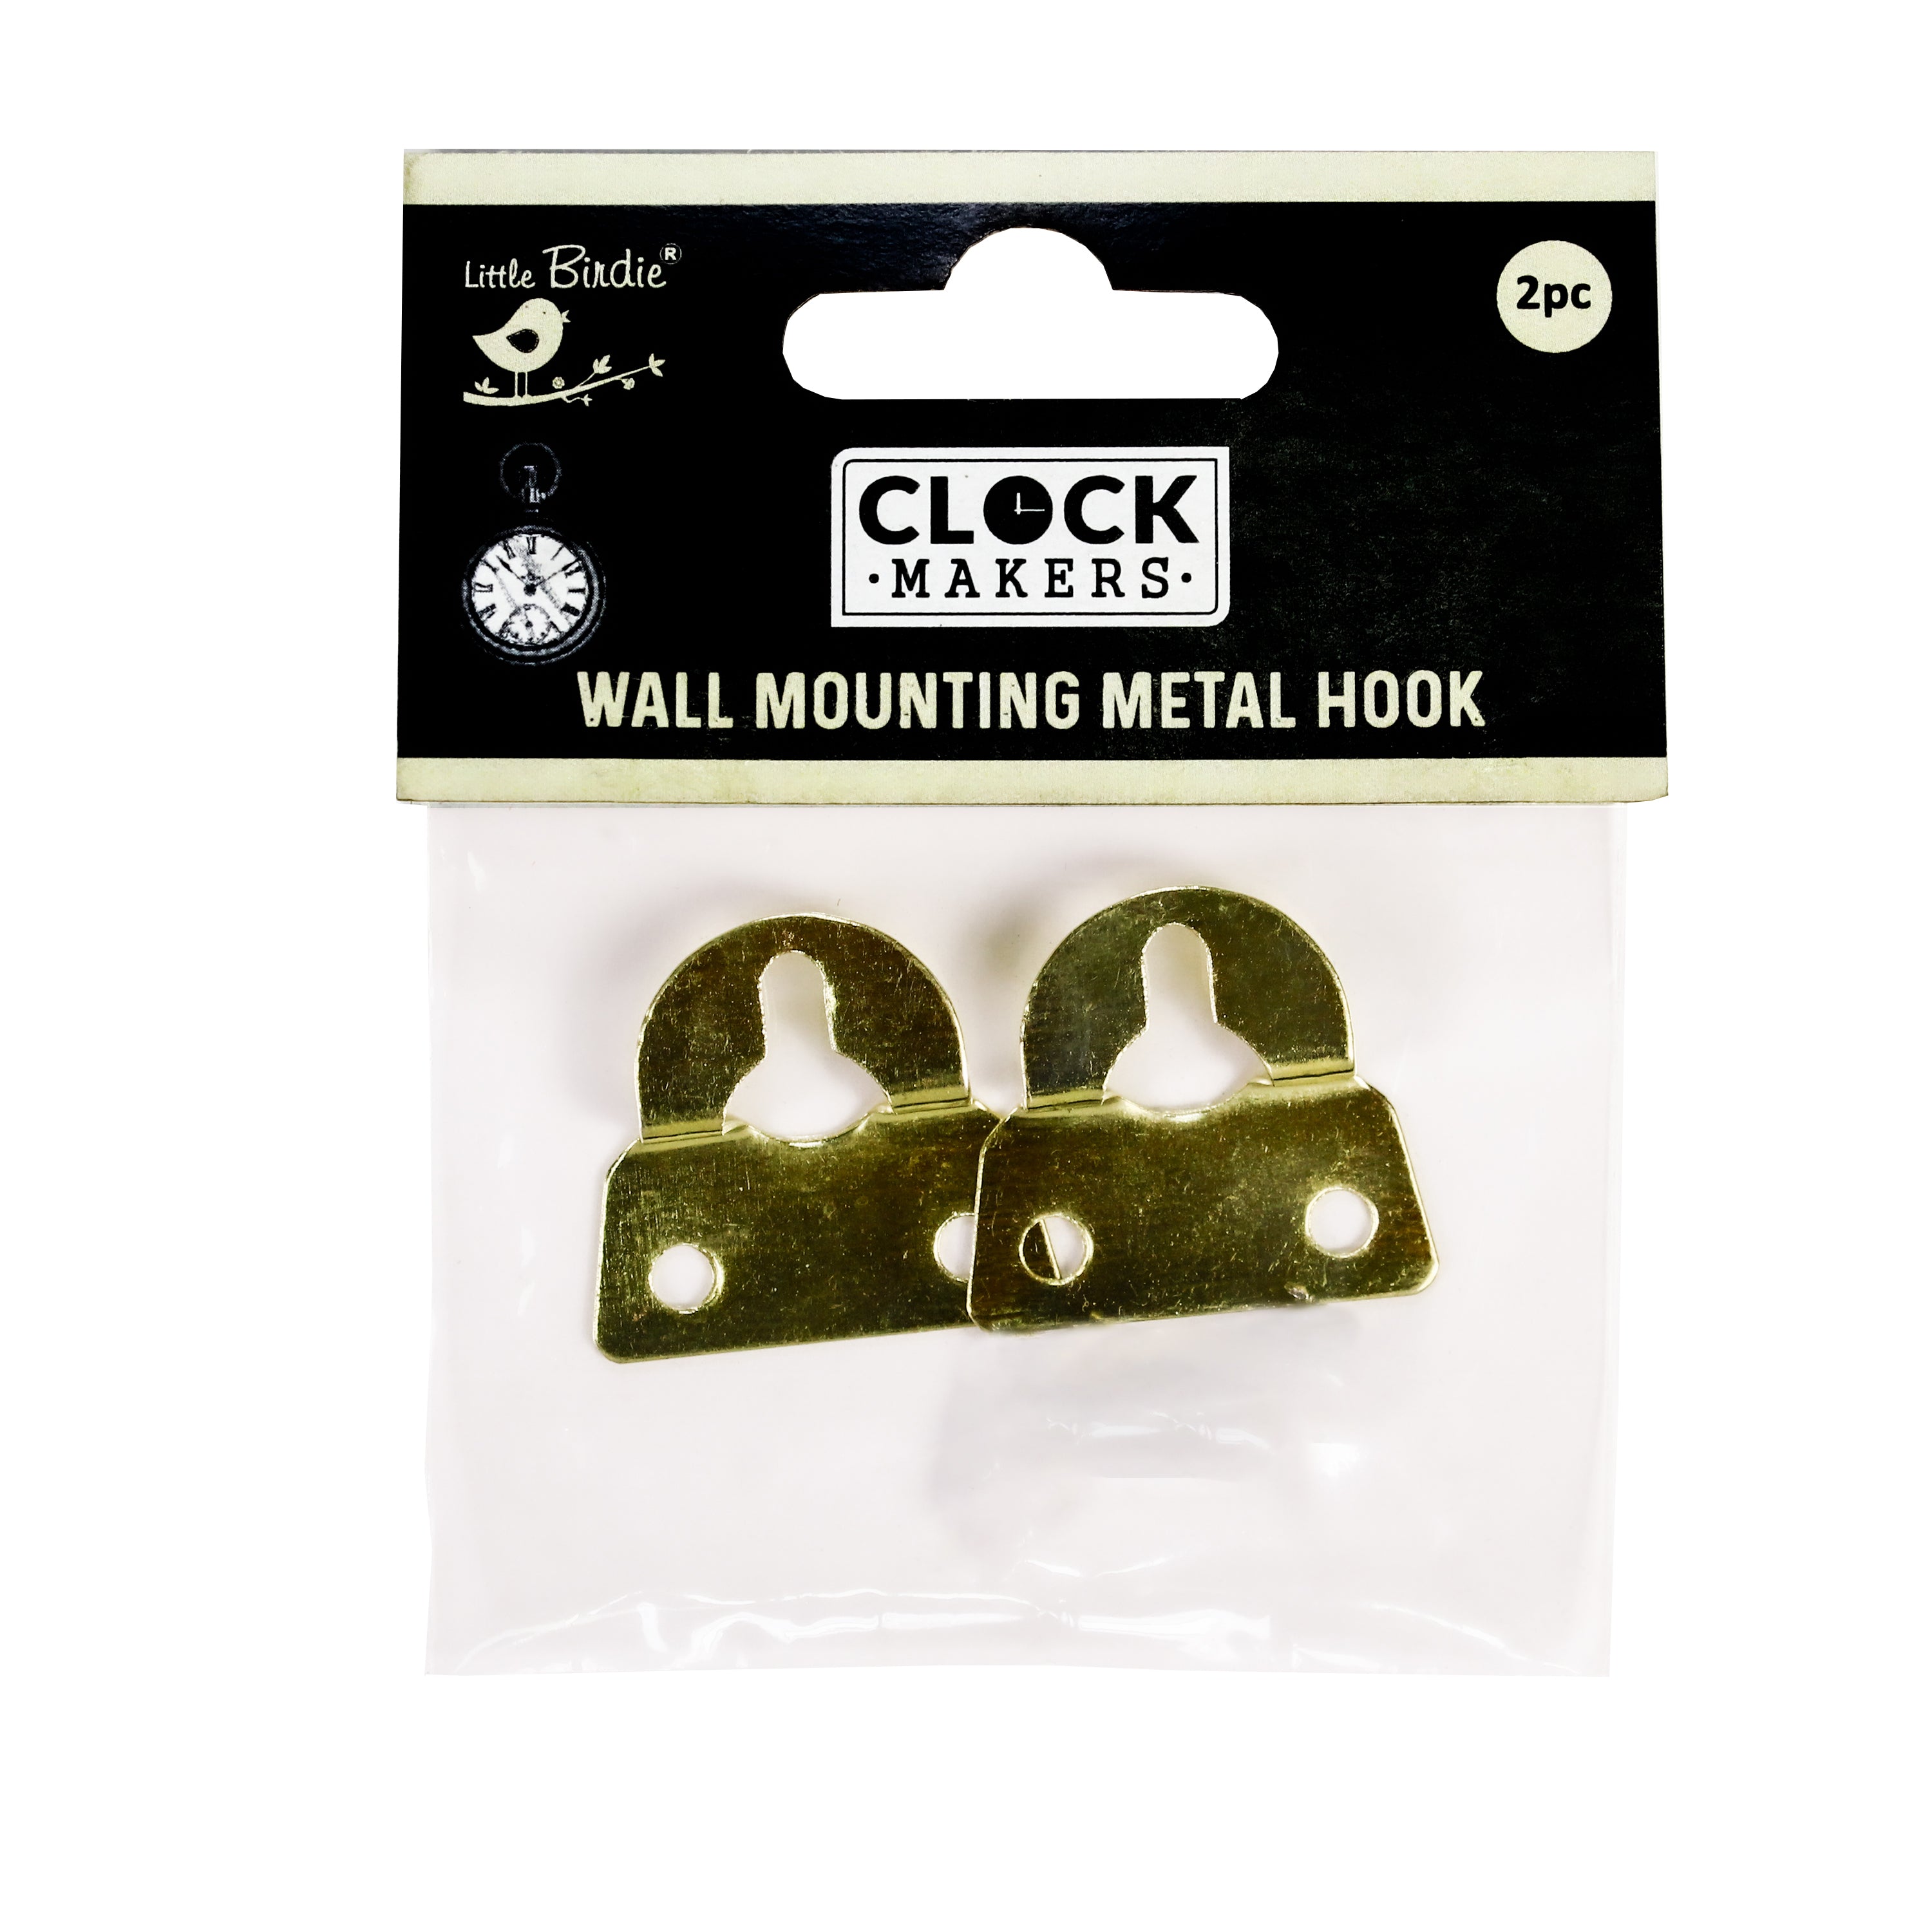 Wall Mounting Metal Hooks Square Gold 2Pc Pbhc Lb